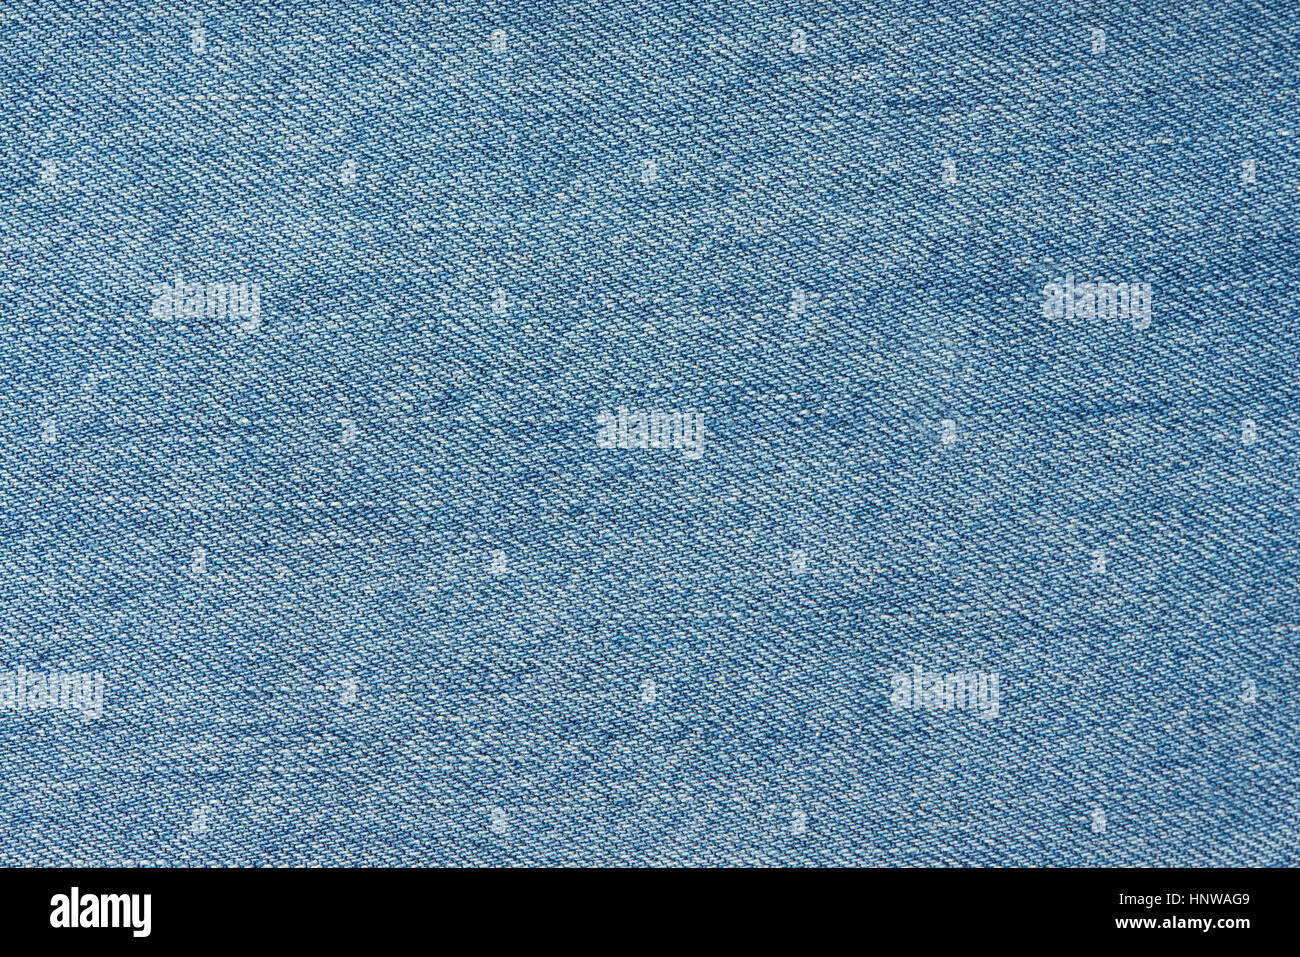 La textura de la luz blue jeans macro con rosca horizontal Foto de stock